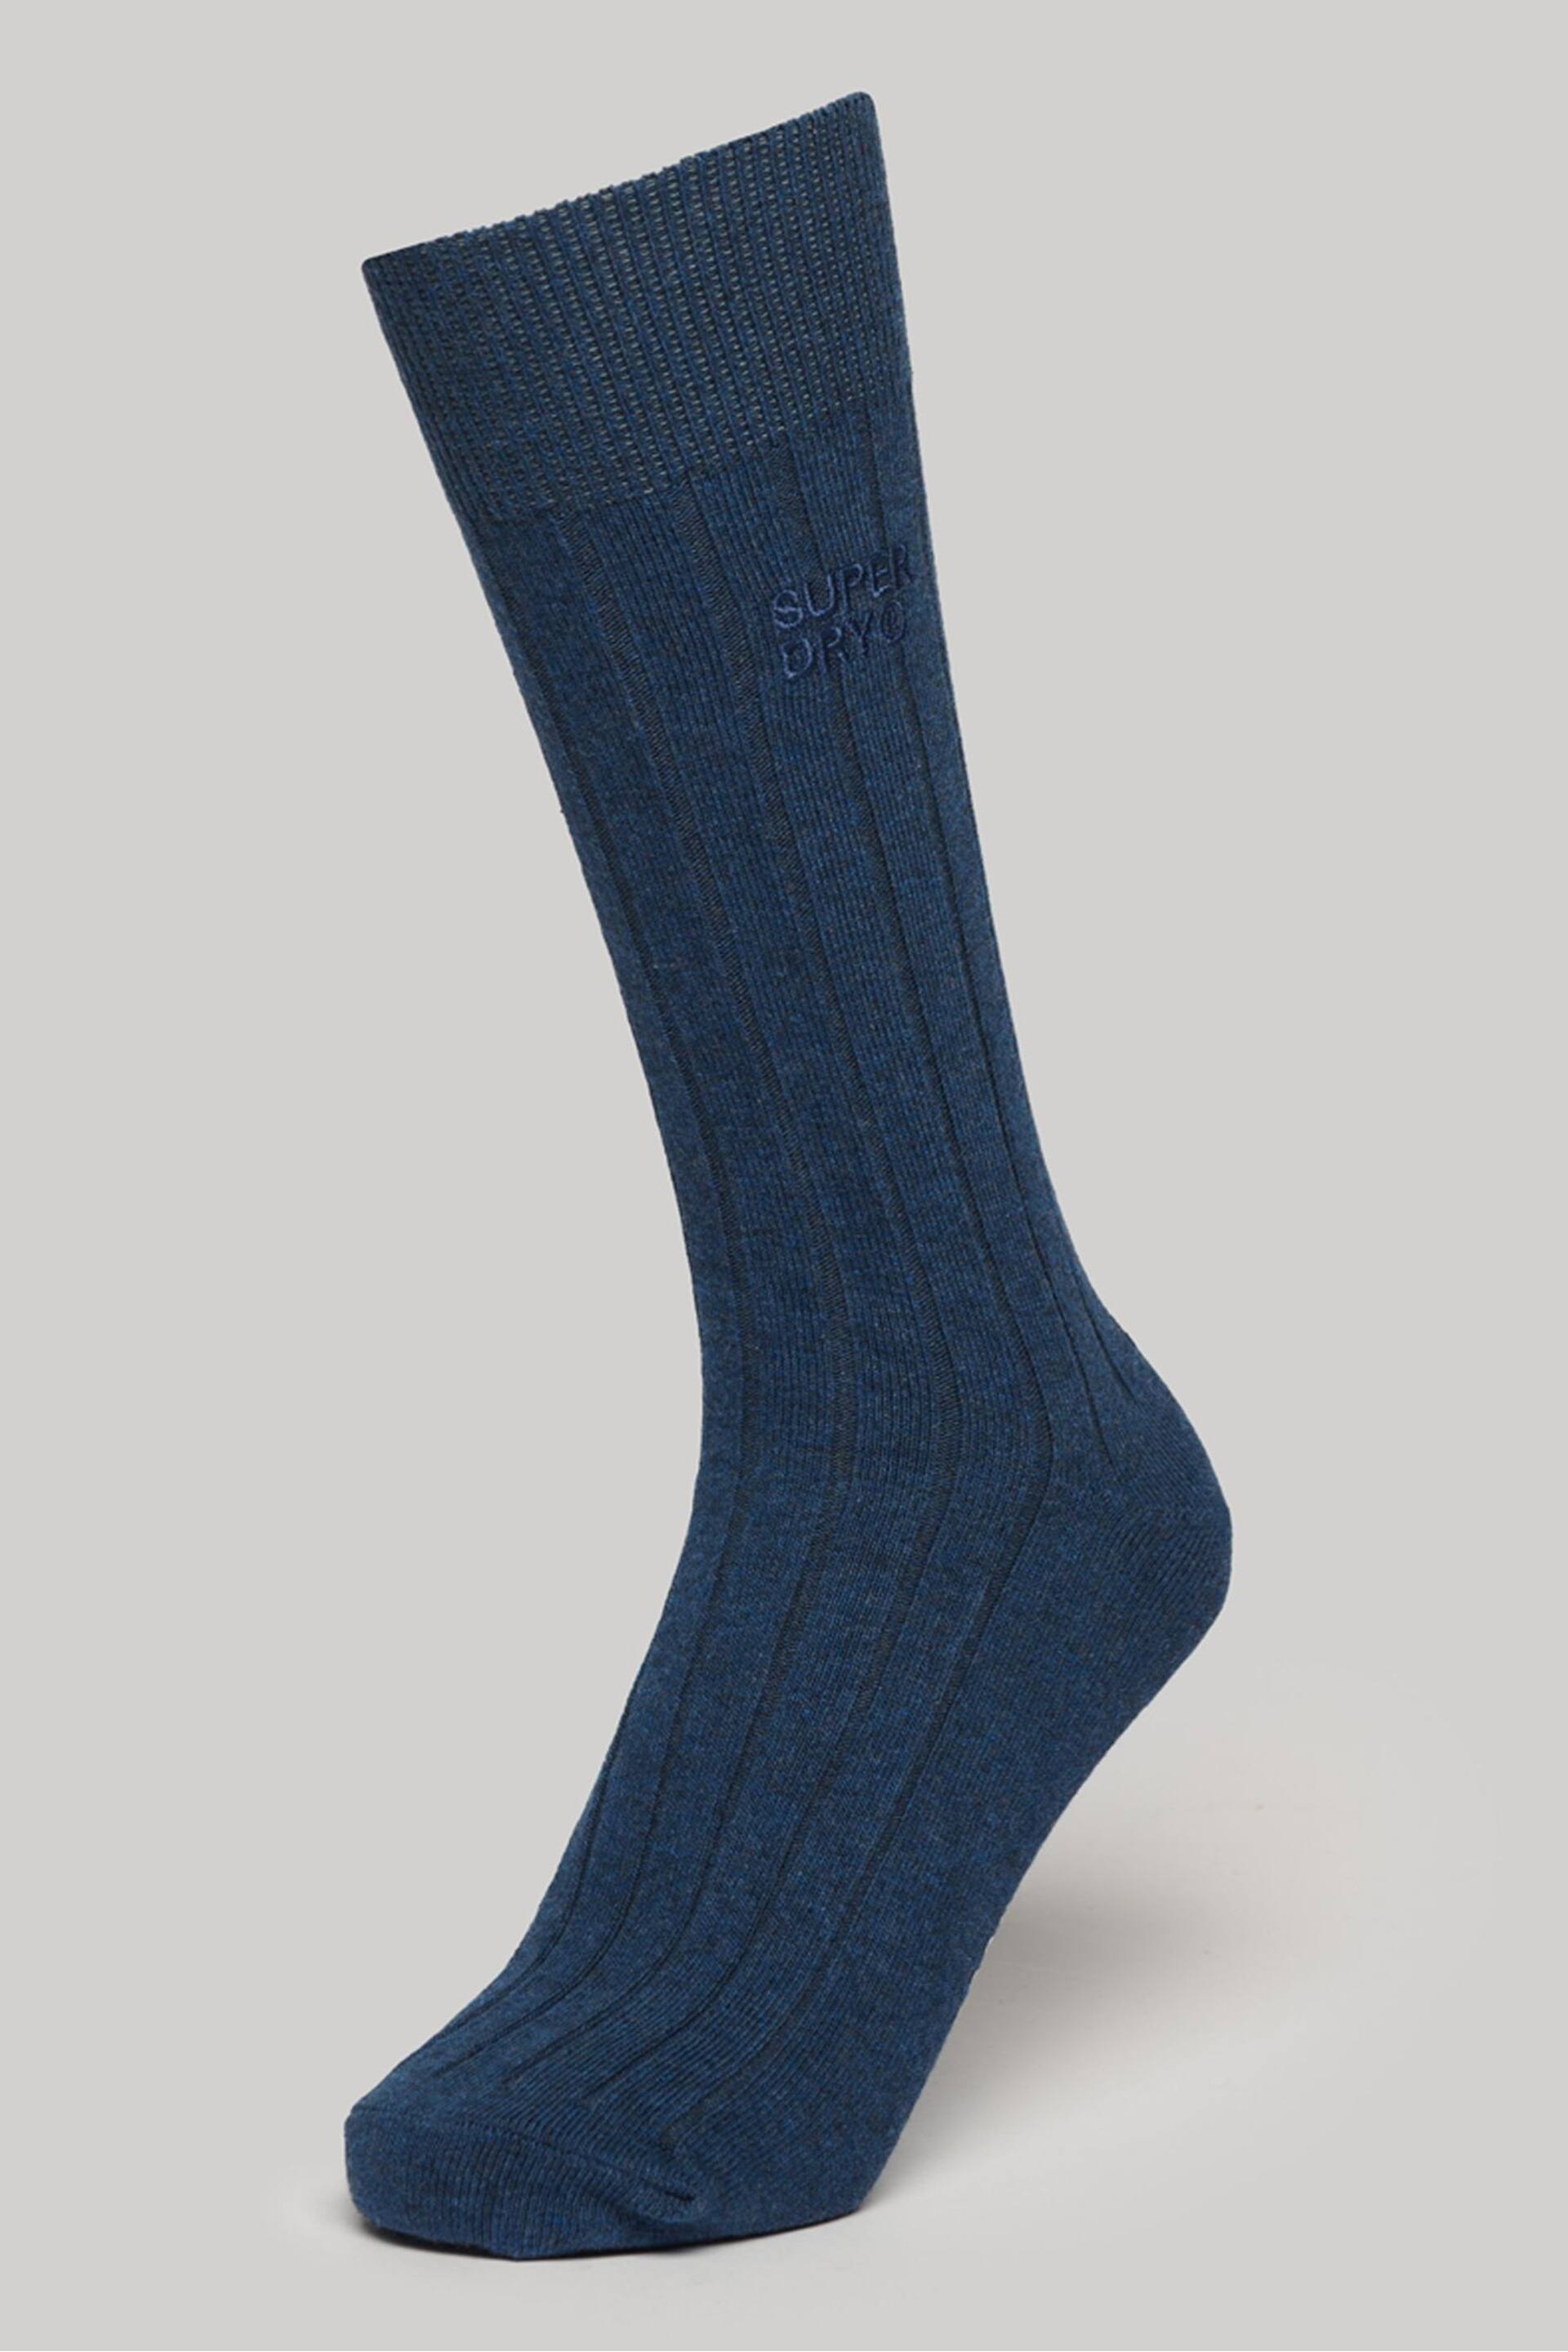 Superdry Light Blue Organic Cotton Unisex Core Rib Crew Socks 3 Pack - Image 3 of 5